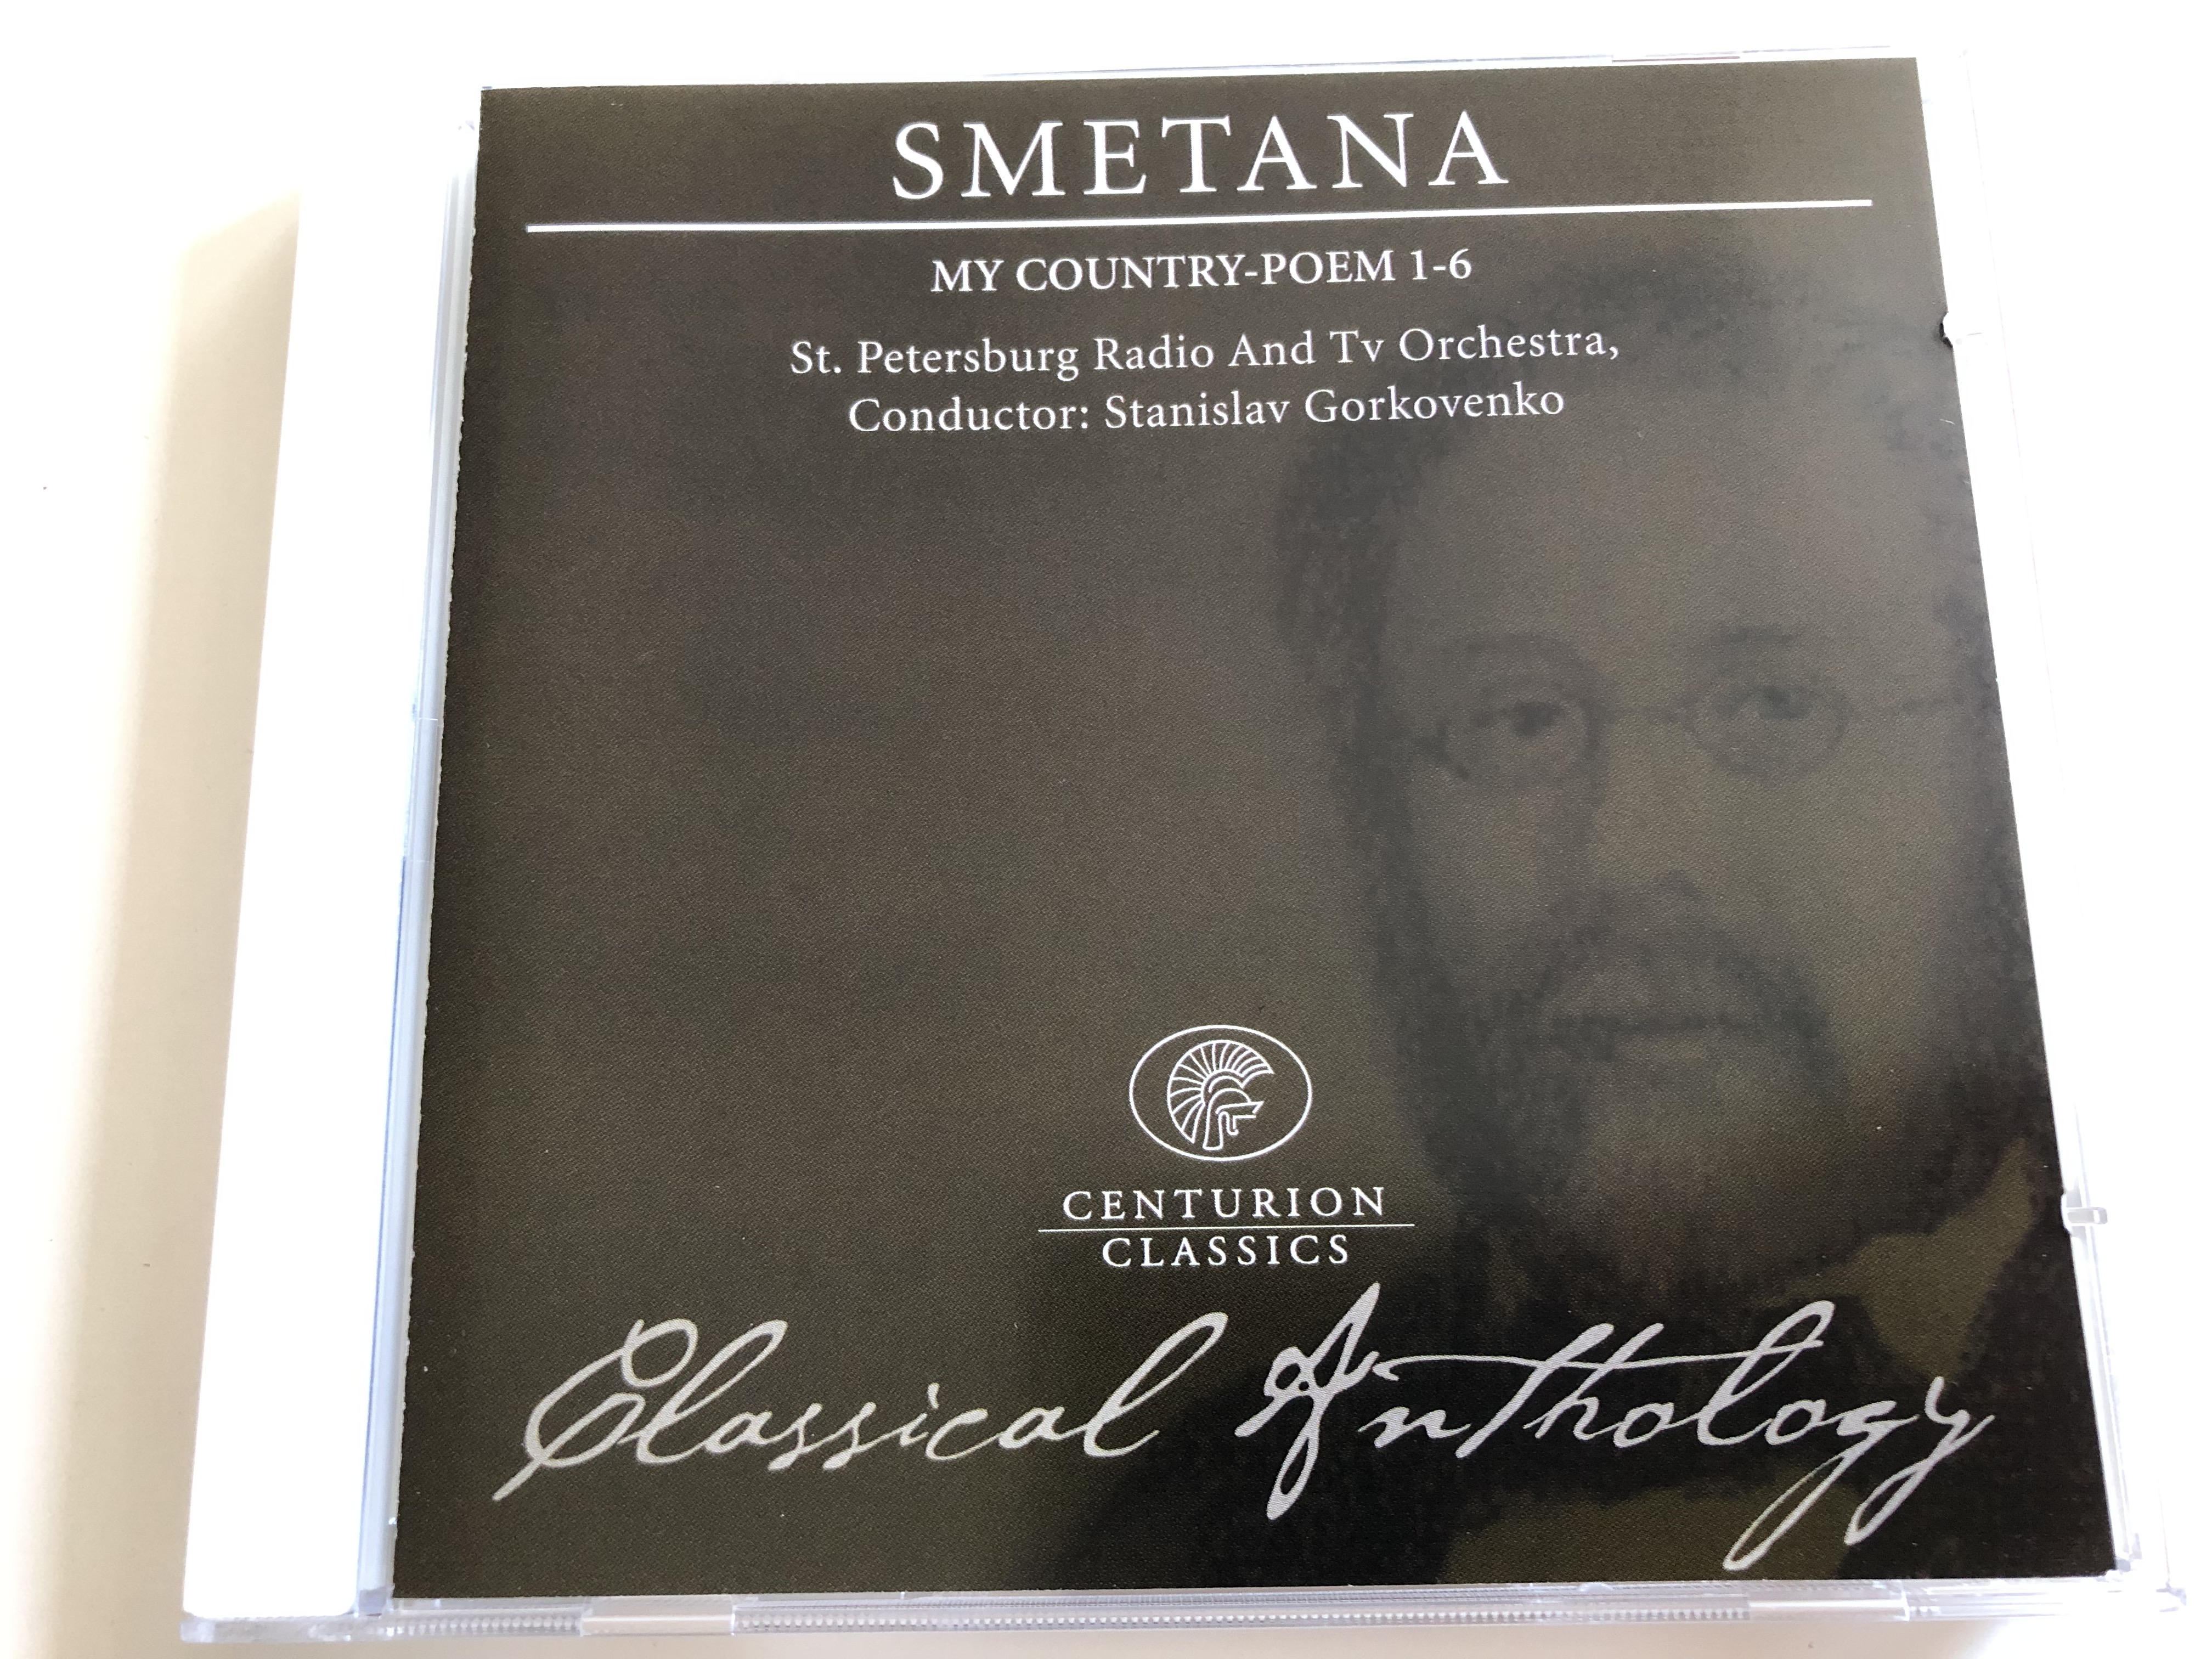 smetana-my-country-poem-1-6-st.-petersburg-radio-and-tv-orchestra-conductor-stanislav-gorkovenko-classical-anthology-centurion-classics-audio-cd-2004-iecc30001-24-1-.jpg